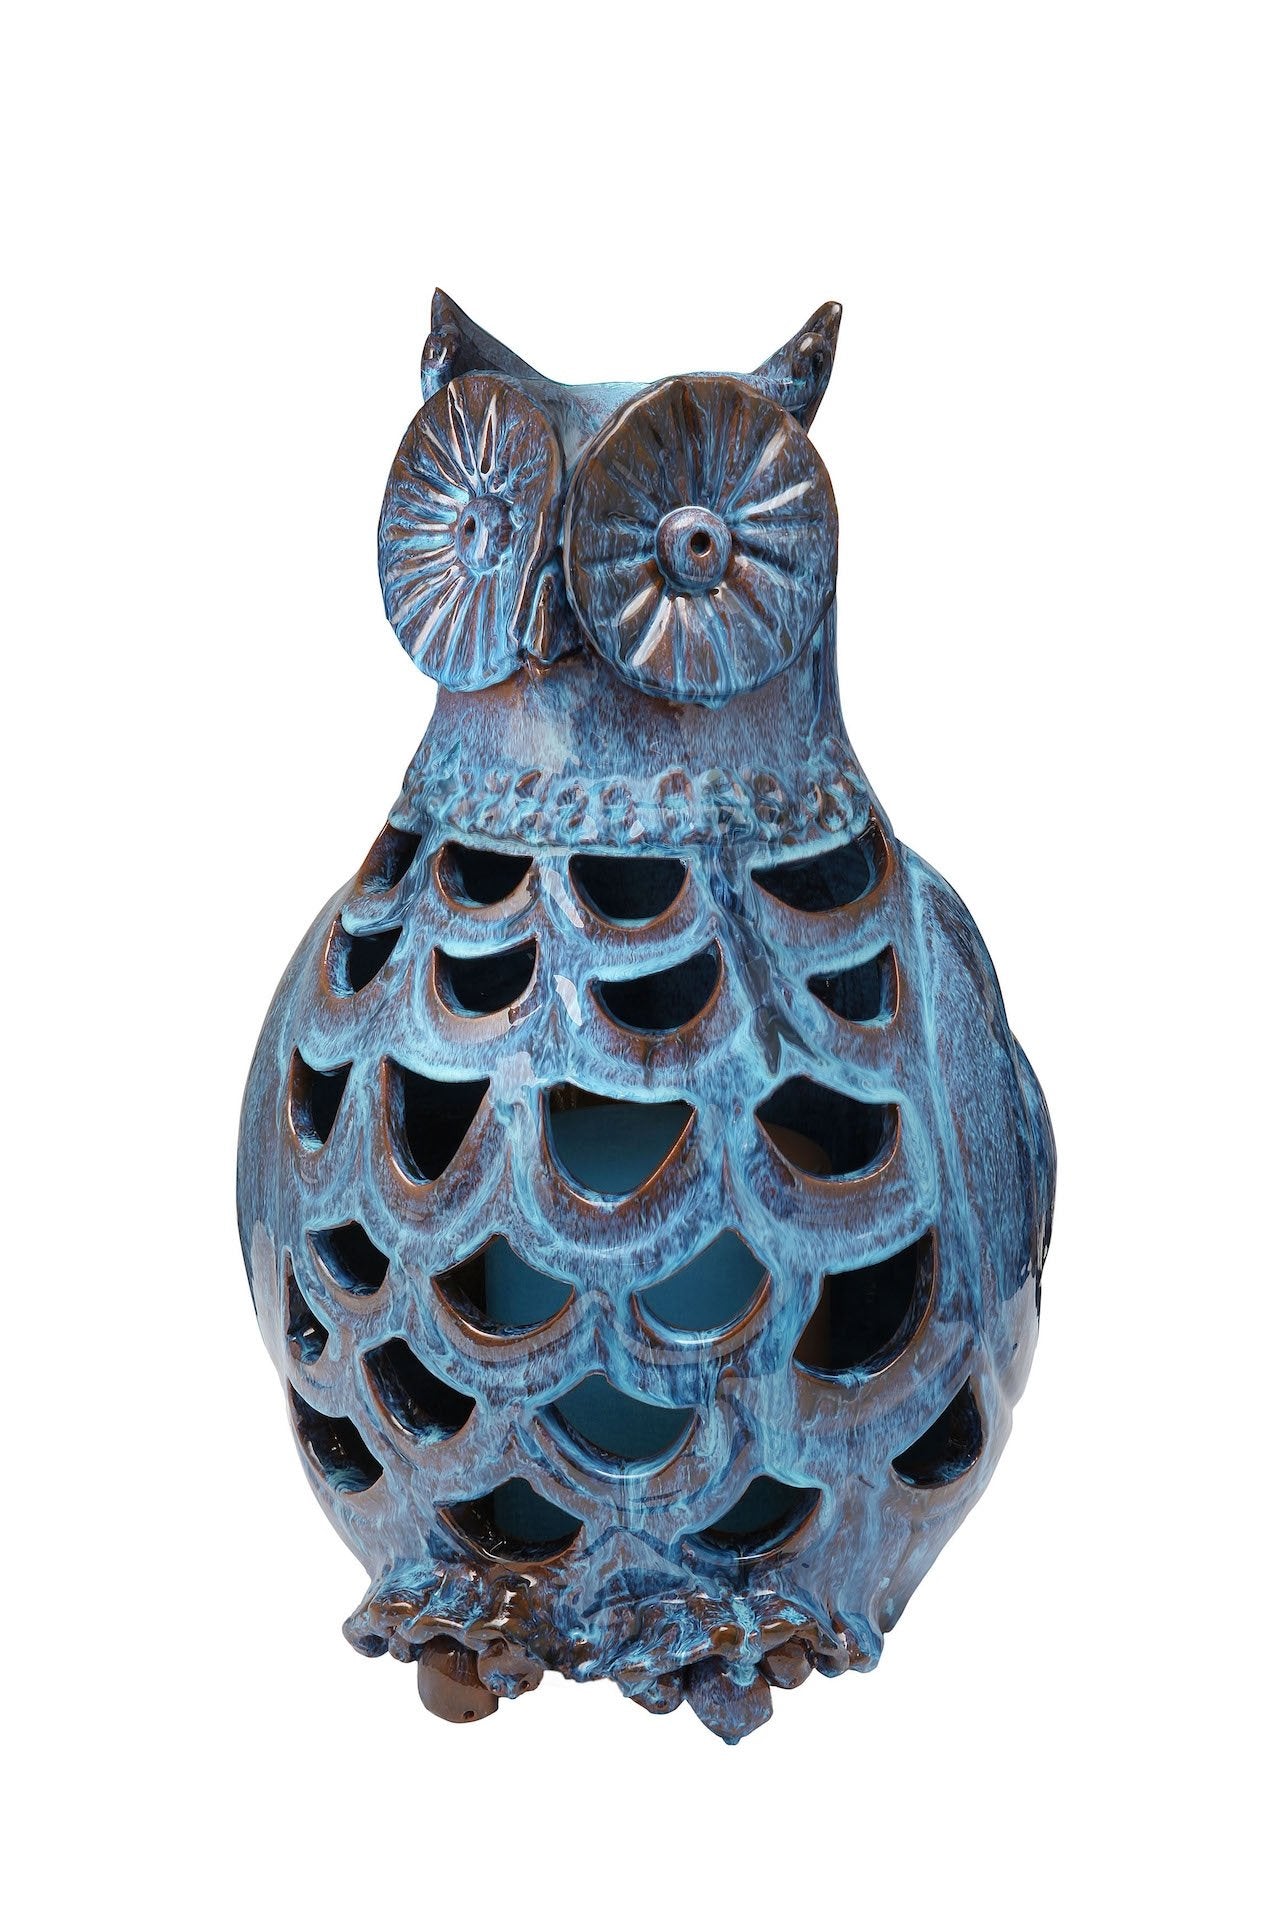 Urn - Blue Owl